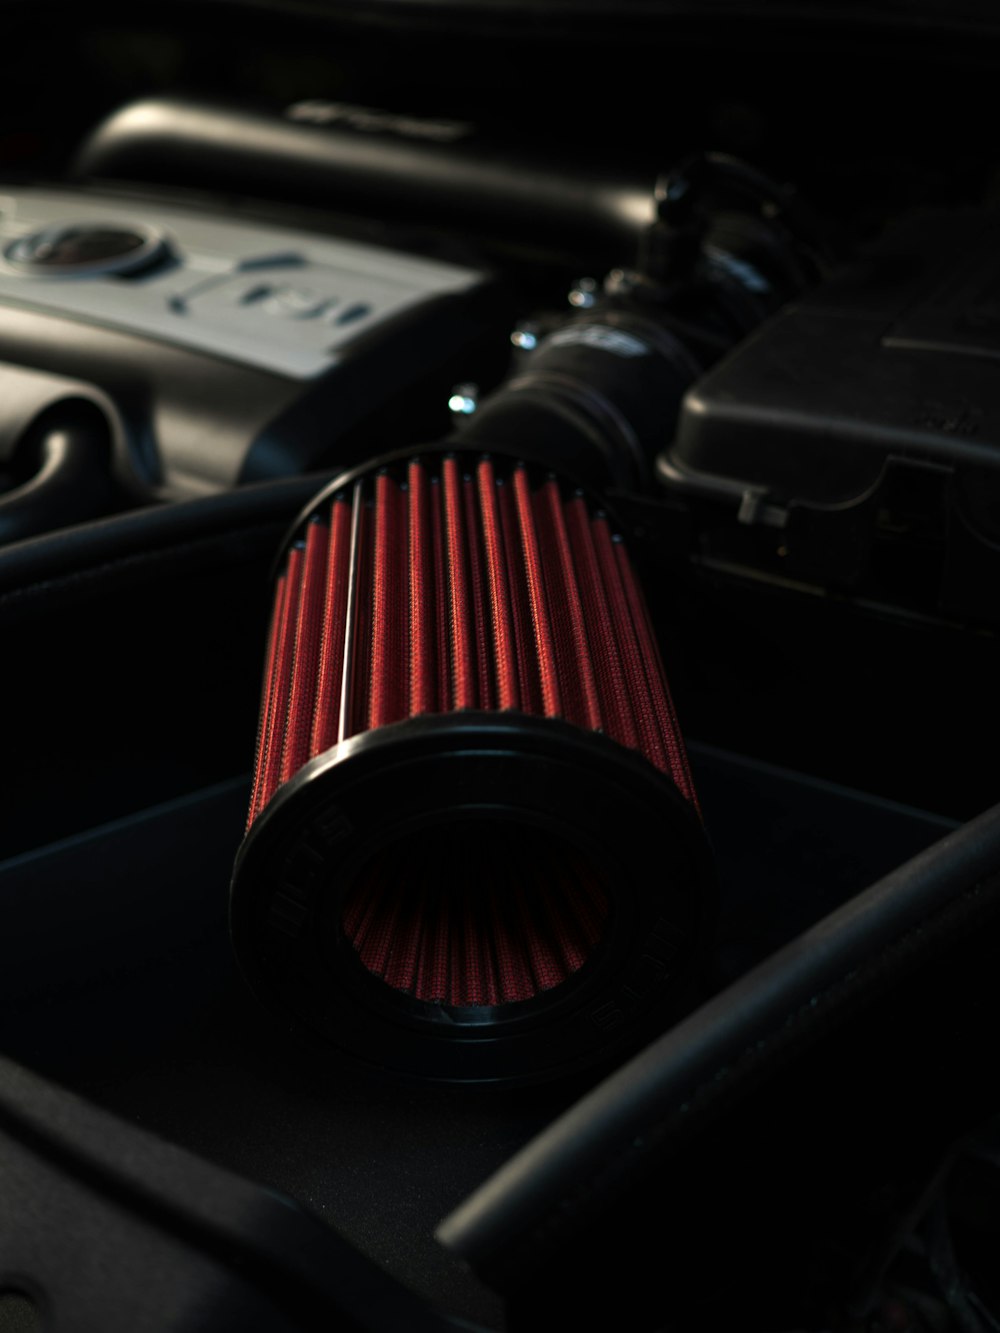 Red and black car engine photo – Free Motor Image on Unsplash